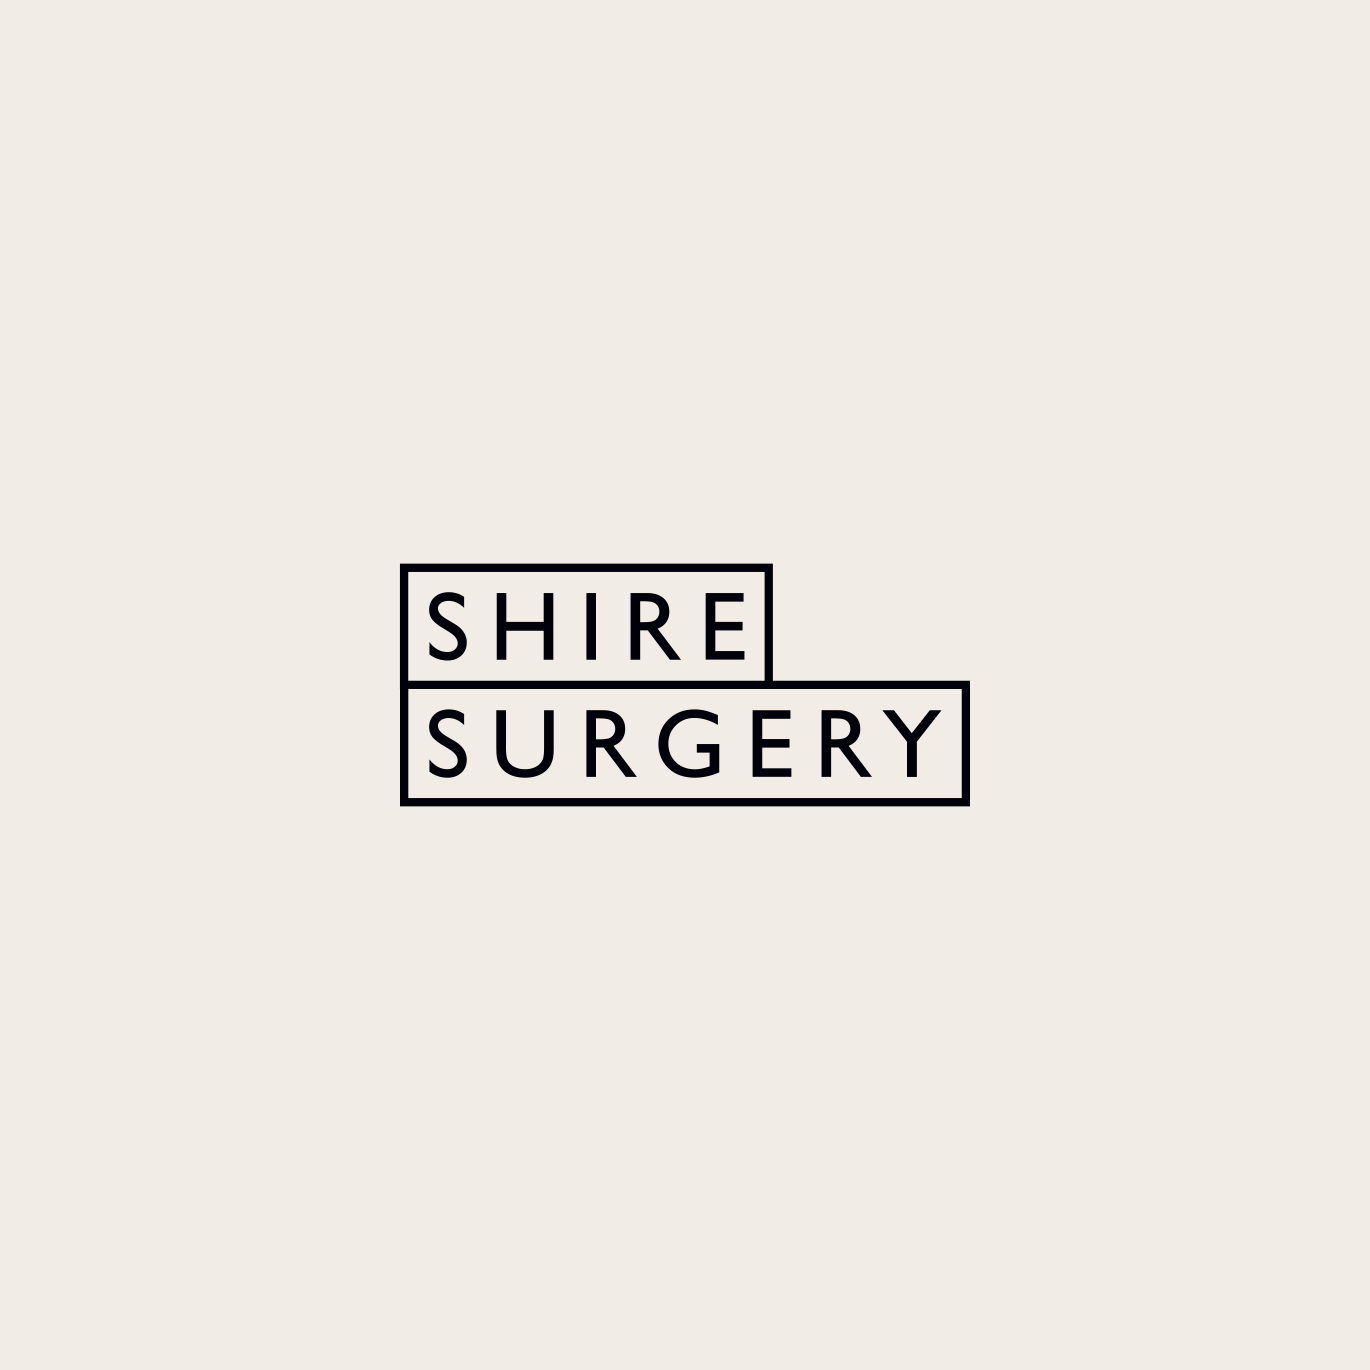 Shire Surgery Logo